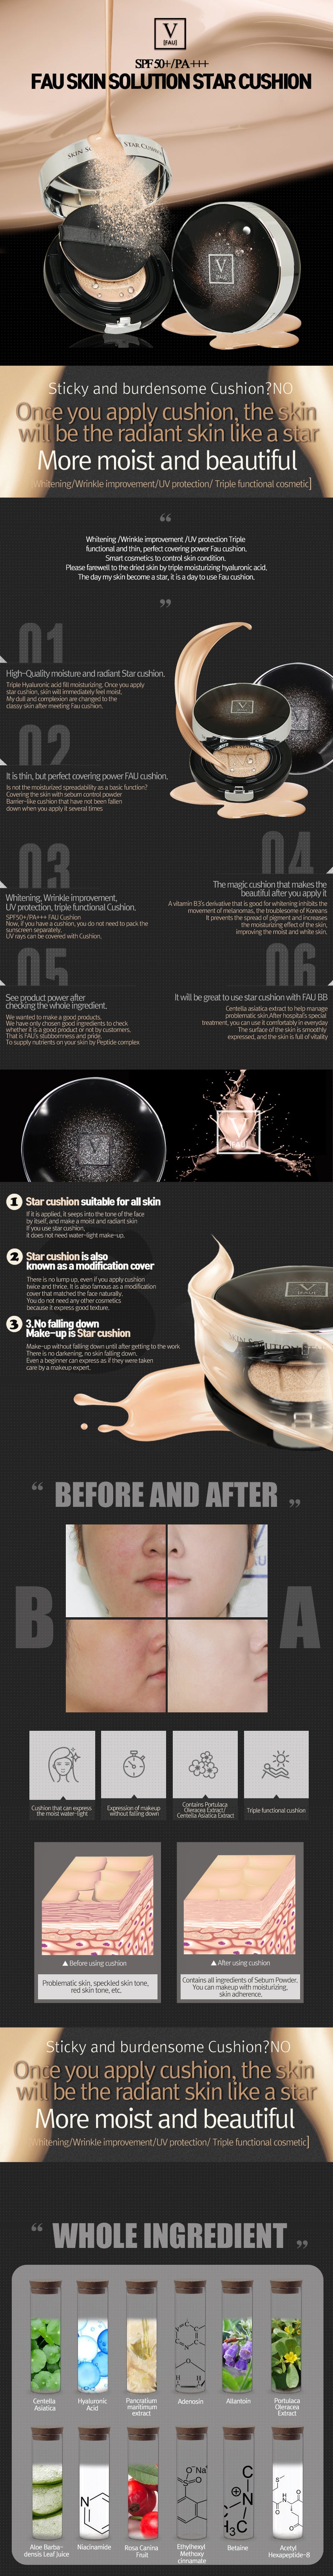 FAU Skin Solution Star Cushion Information 1